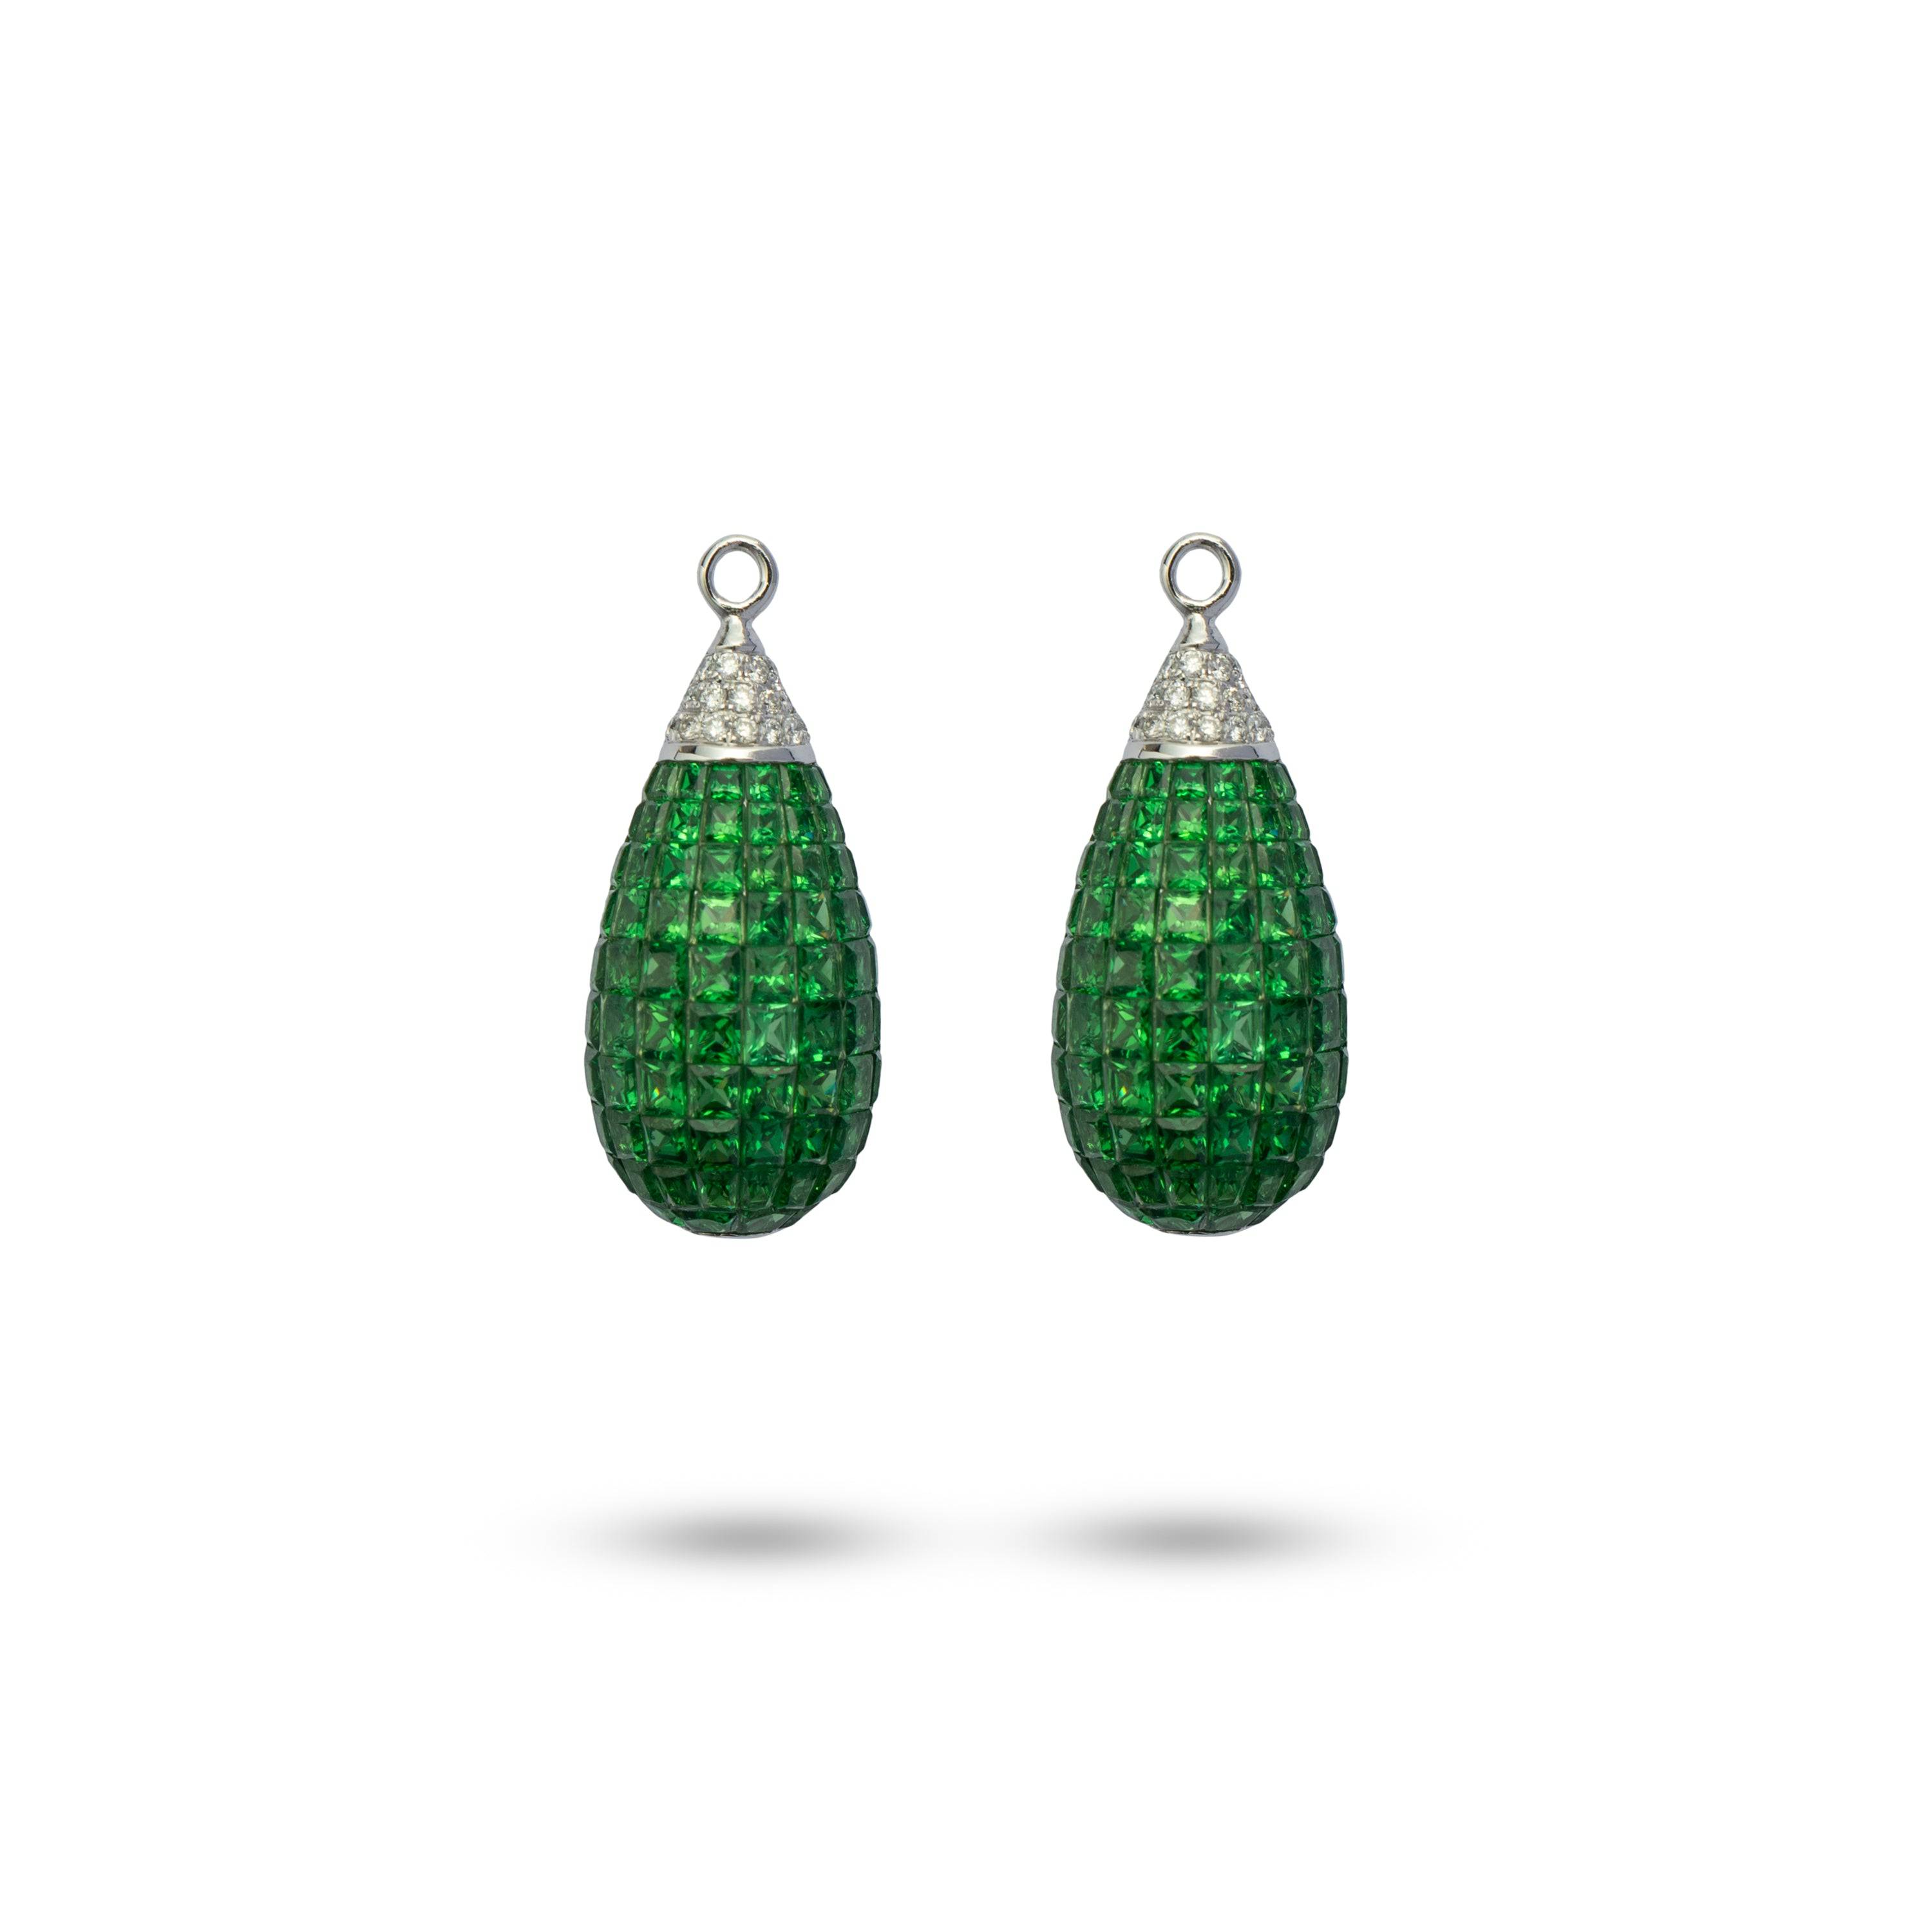 transformational-diamond-tsavorite-necklace-earrings-43615084970148.jpg